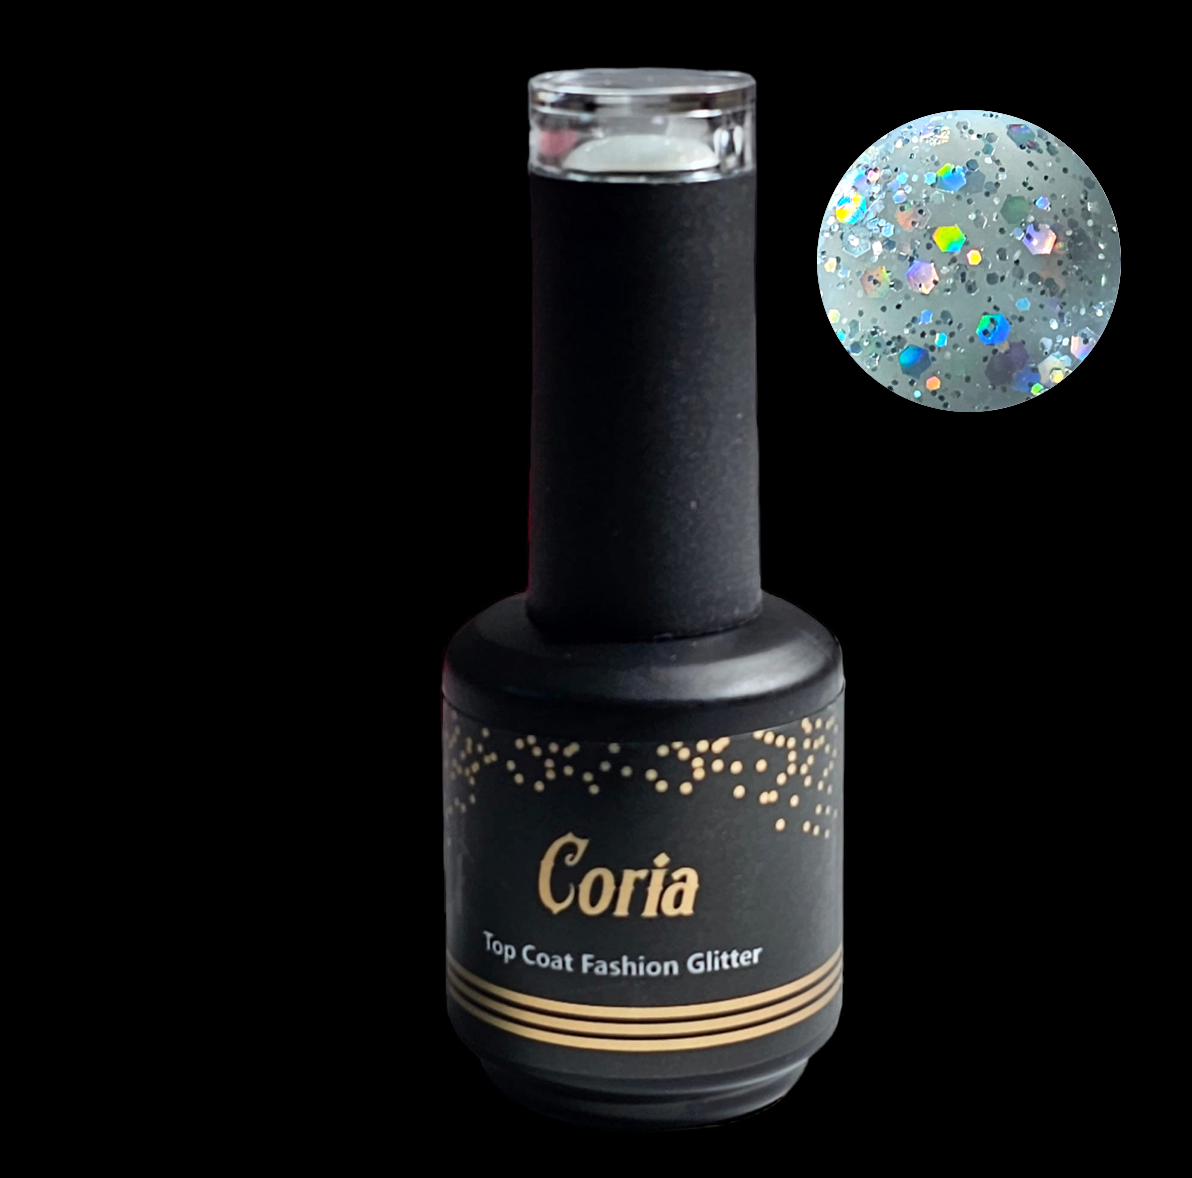 Top Coat Fashion Glitter Coria 15 ml 113